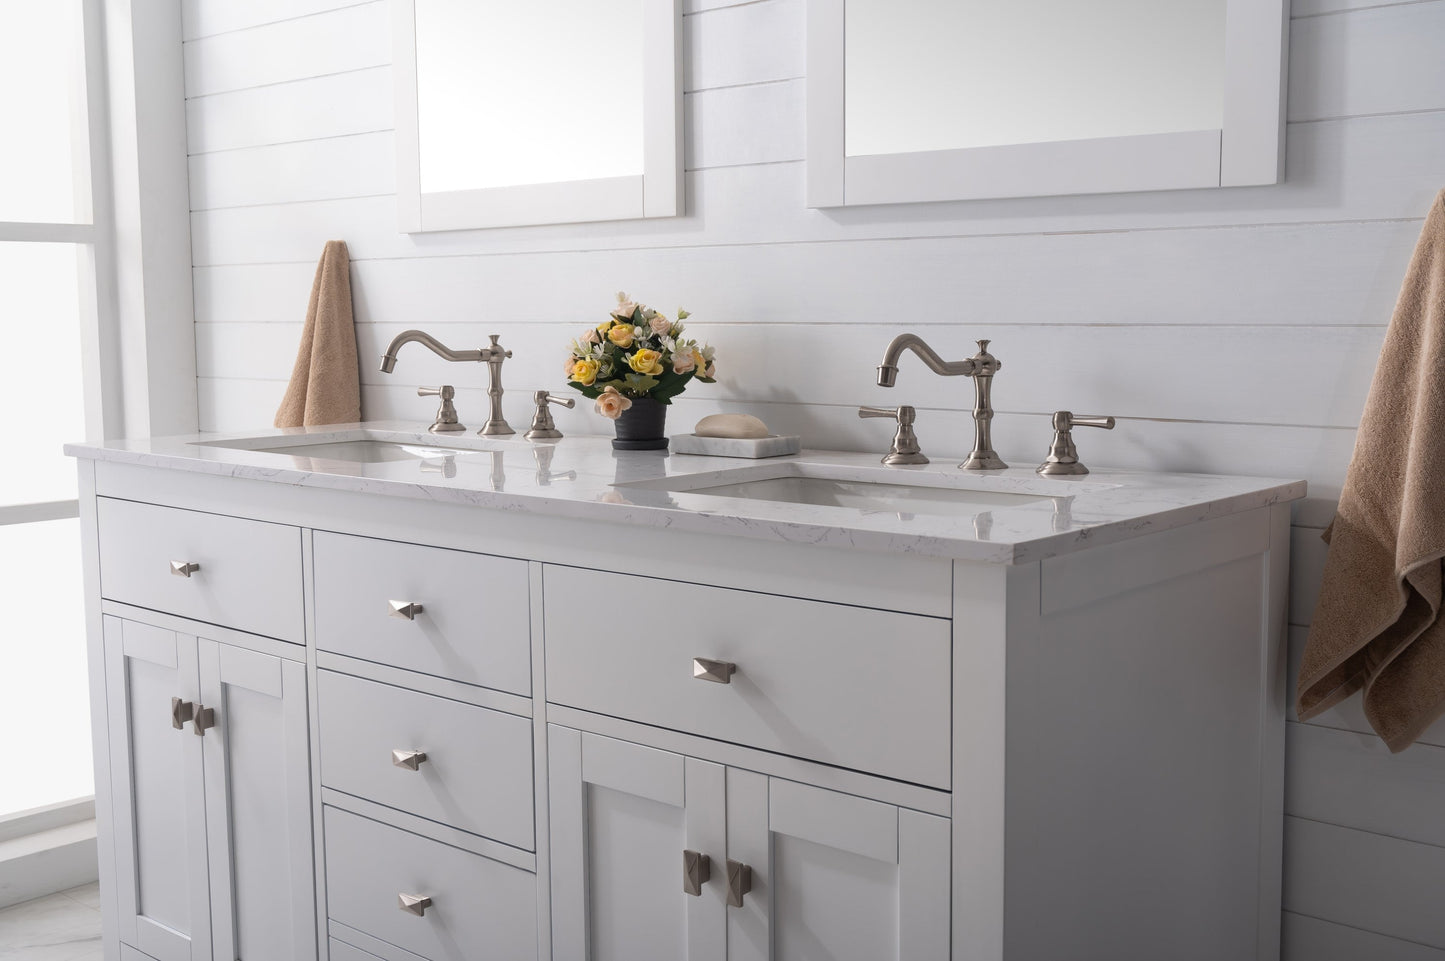 Artemis 60"W x 22"D White Double Sink Bathroom Vanity with Carrara Quartz Countertop and Undermount Porcelain Sink